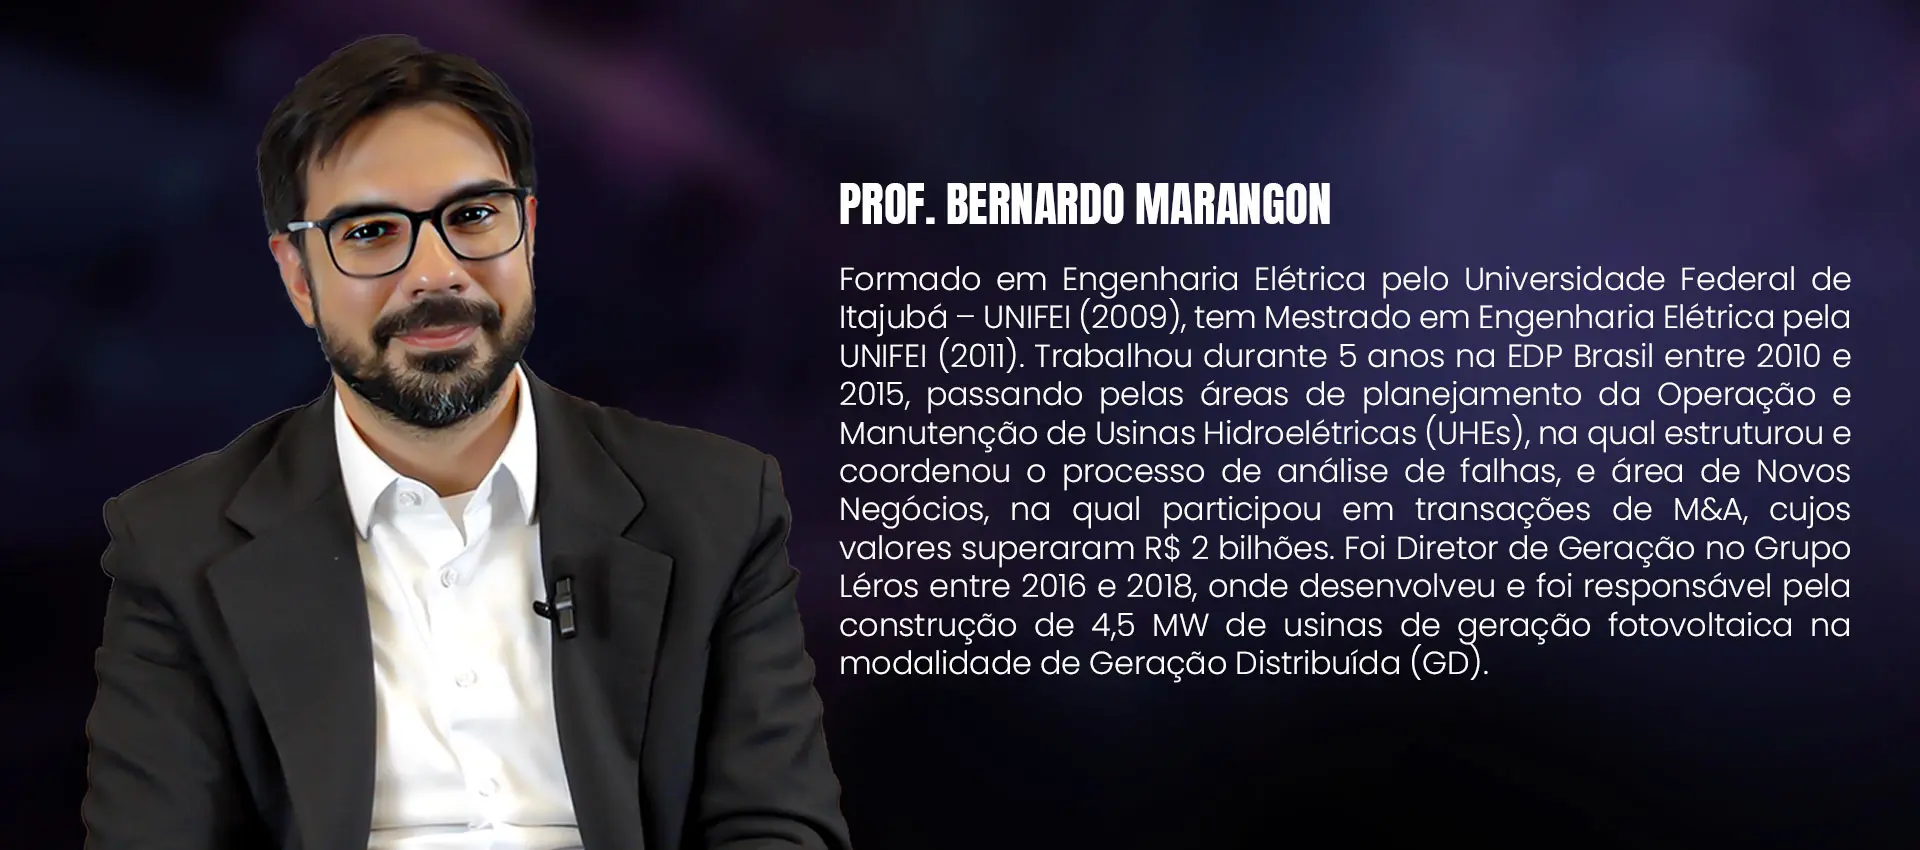 Professor Bernardo Marangon